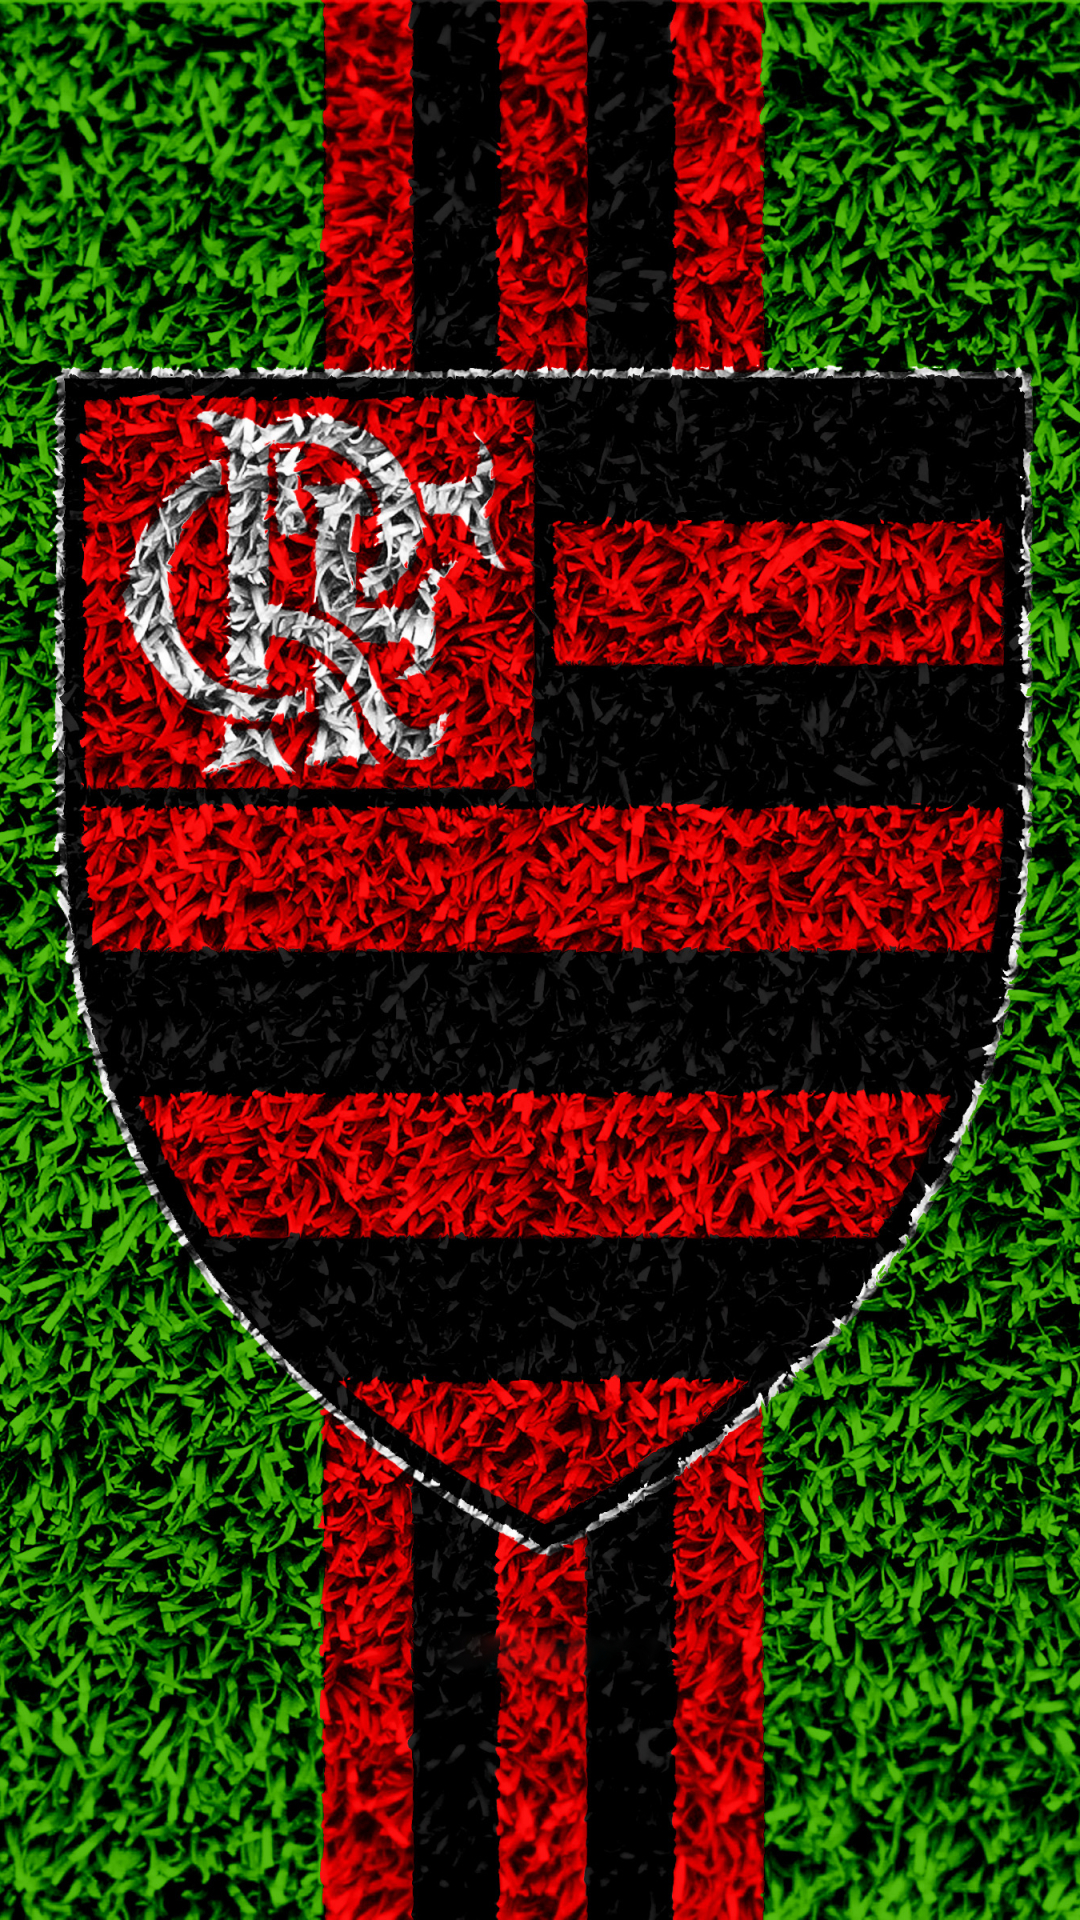 Clube de Regatas do Flamengo Phone Wallpaper